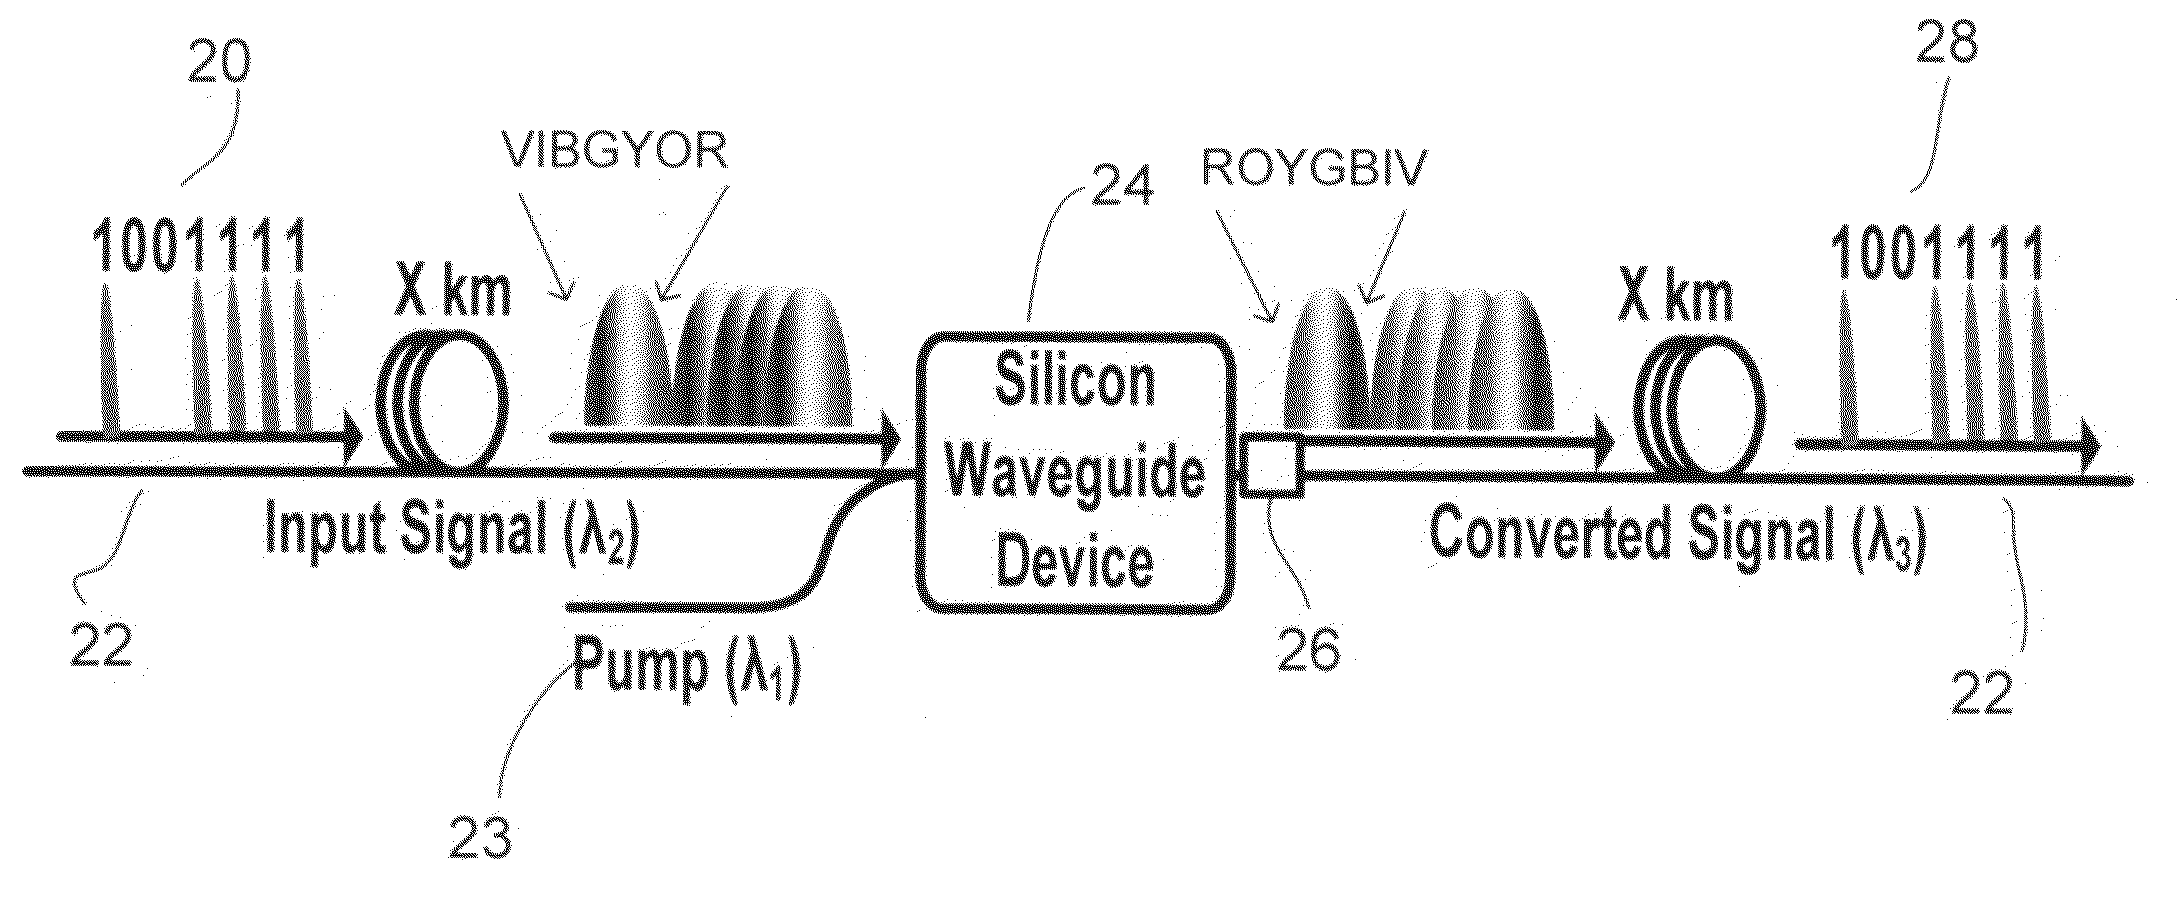 Silicon waveguide dispersion compensator using optical phase conjugation